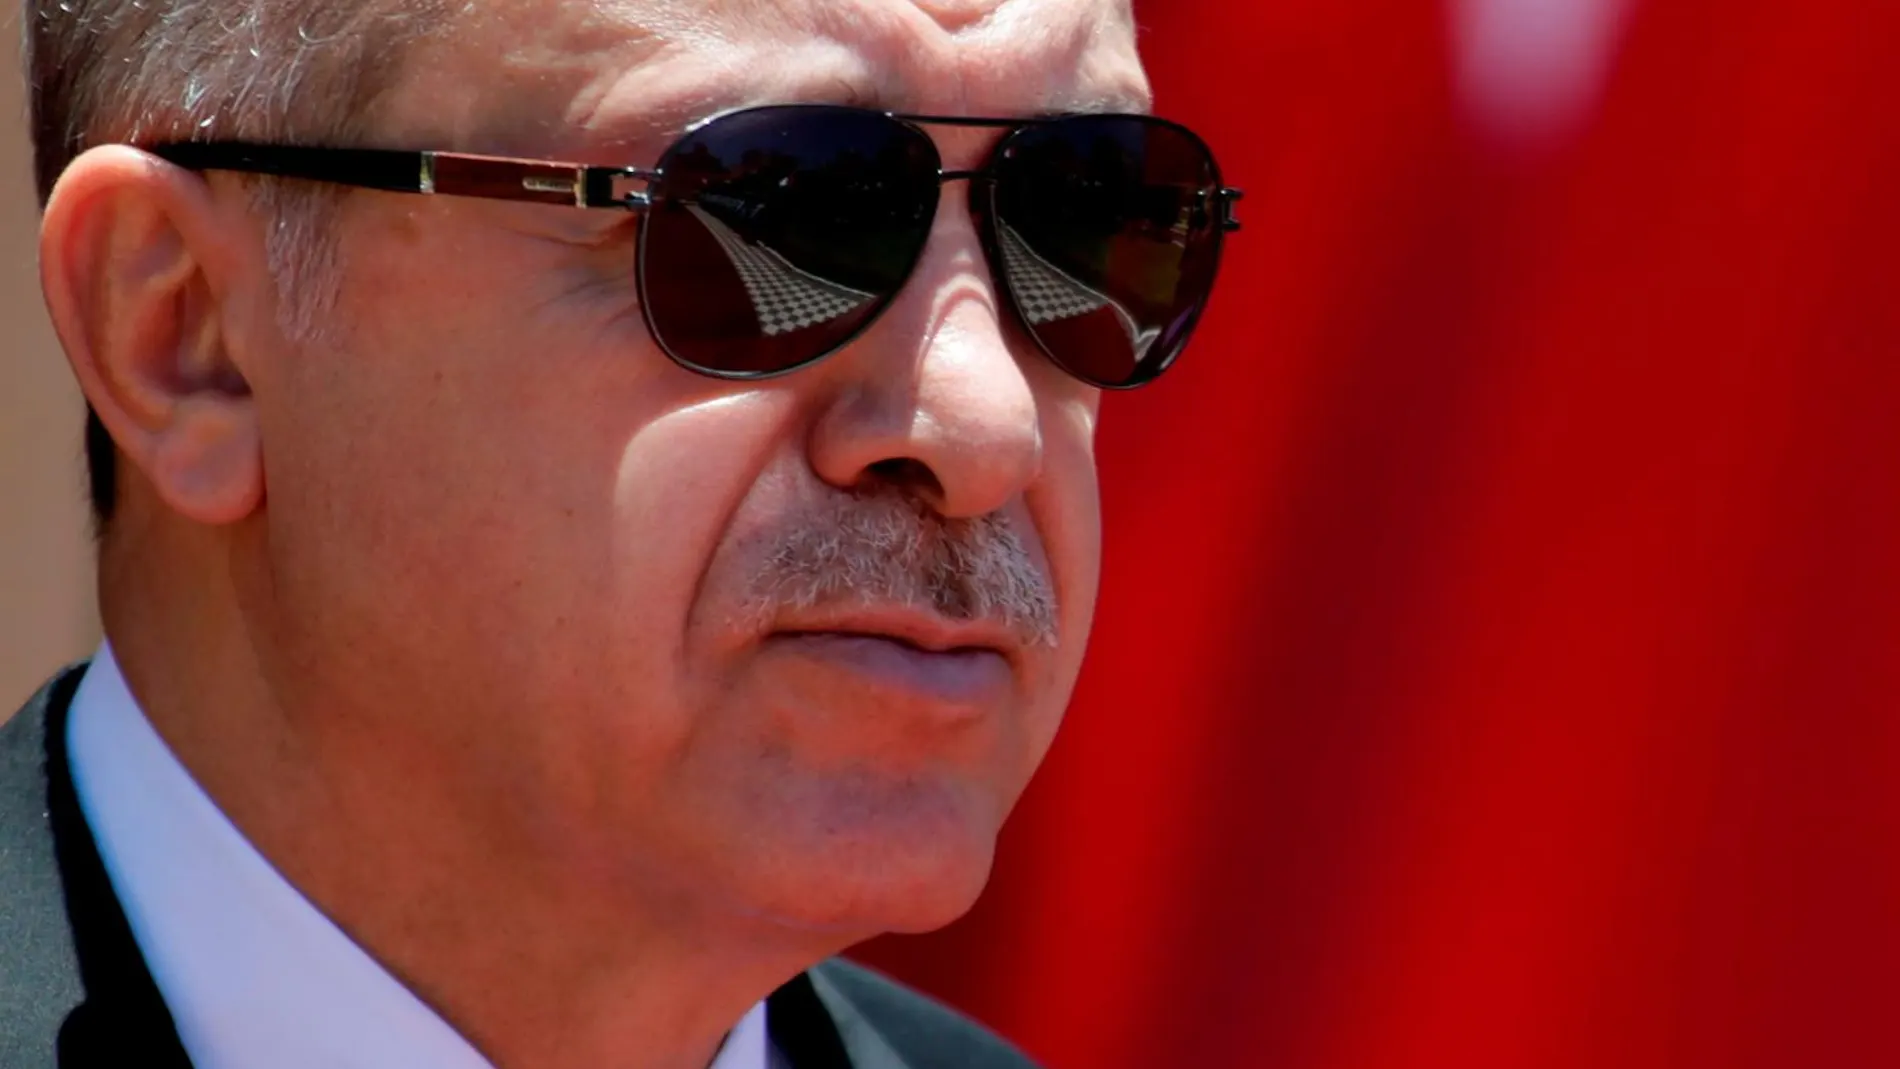 El presidente turco, Erdogan, en la cumbre del G-20 / REUTERS